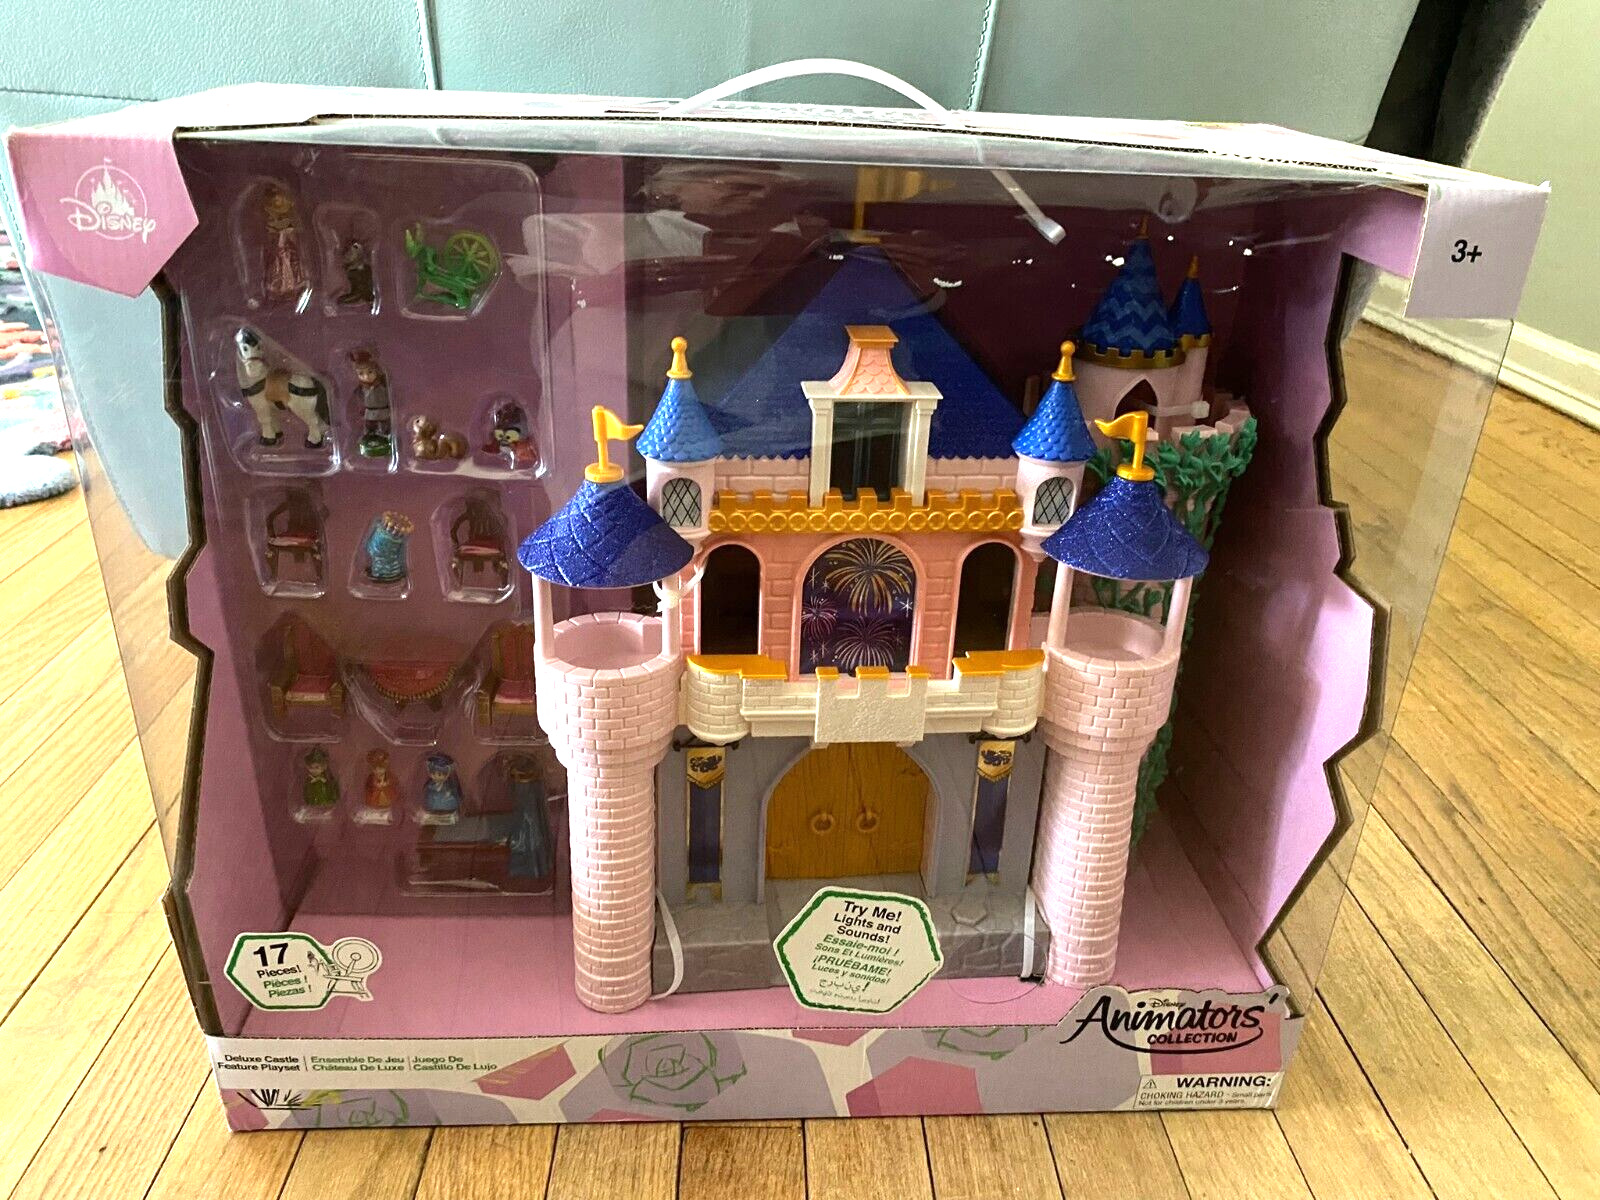 Disney Animators Collection Deluxe SLEEPING BEAUTY Castle Playset - NEW in Box